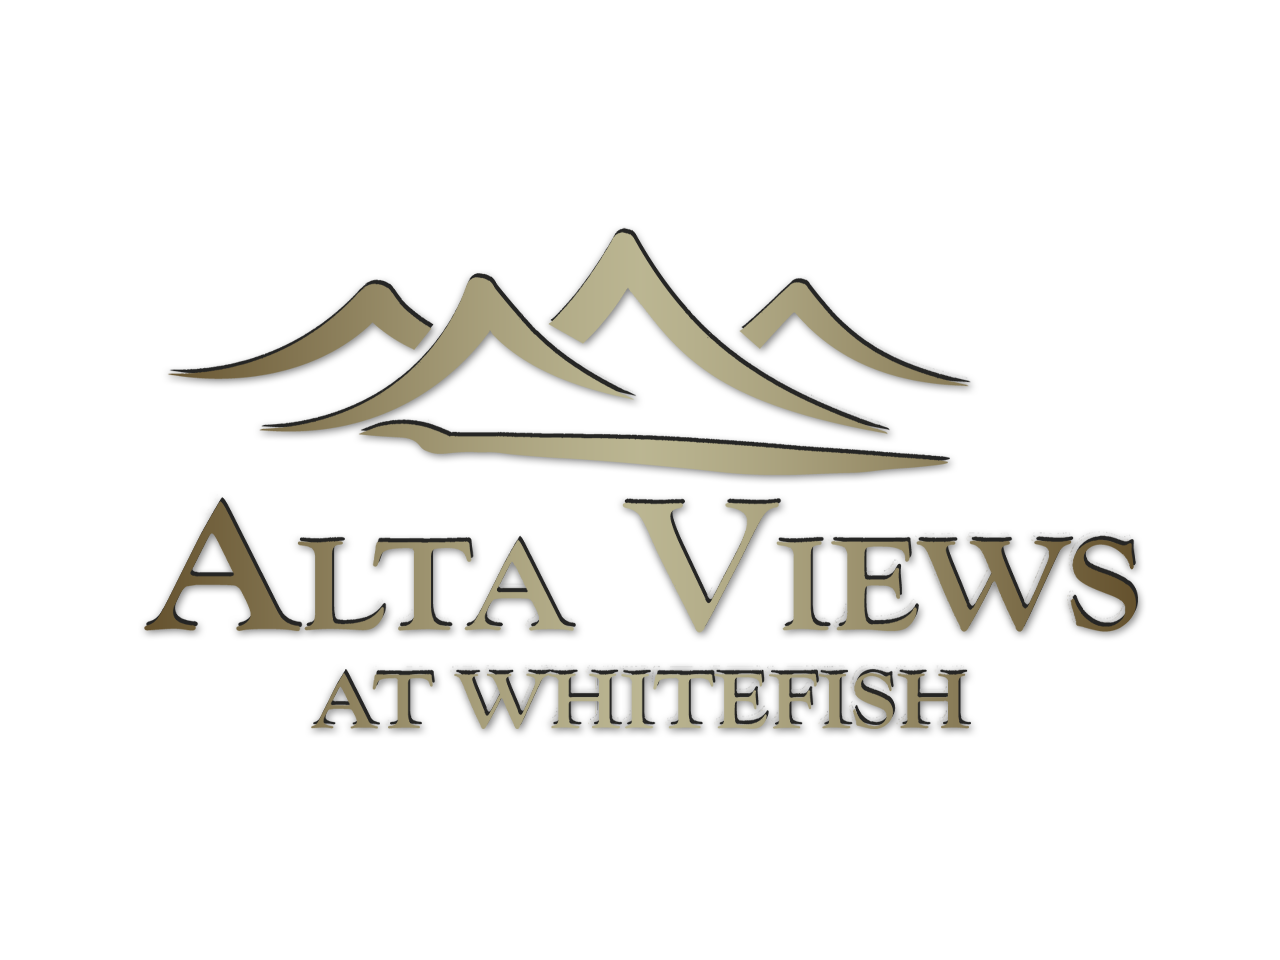 New Orleans Social Media - Alta Views Whitefish 